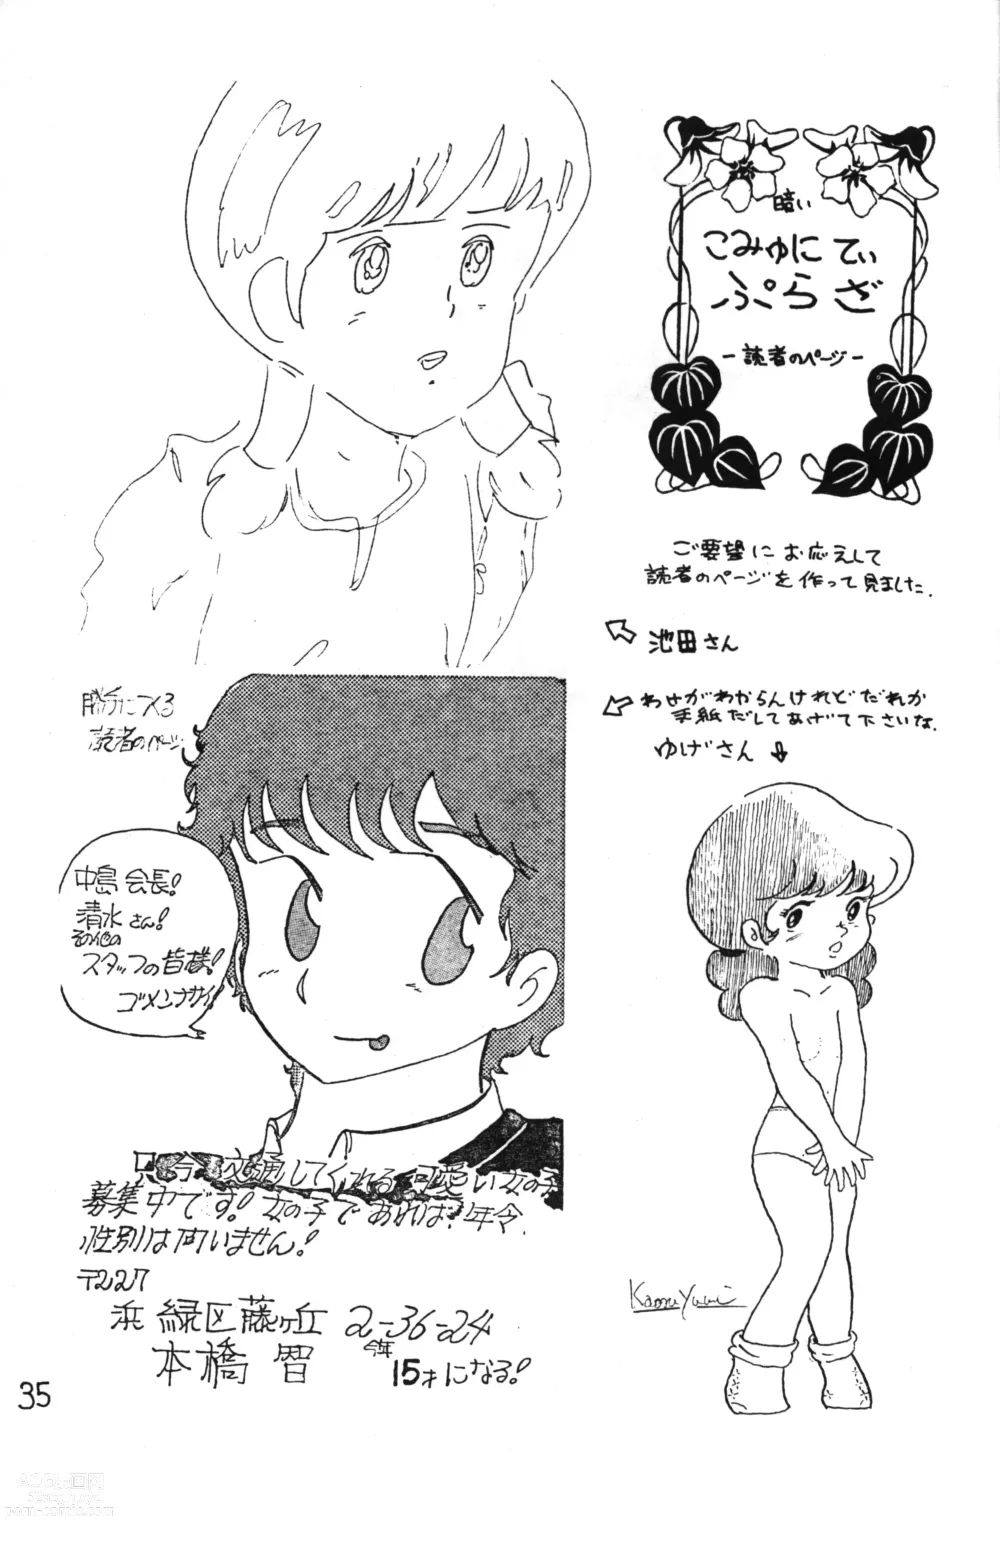 Page 35 of doujinshi Lana-chan World 3